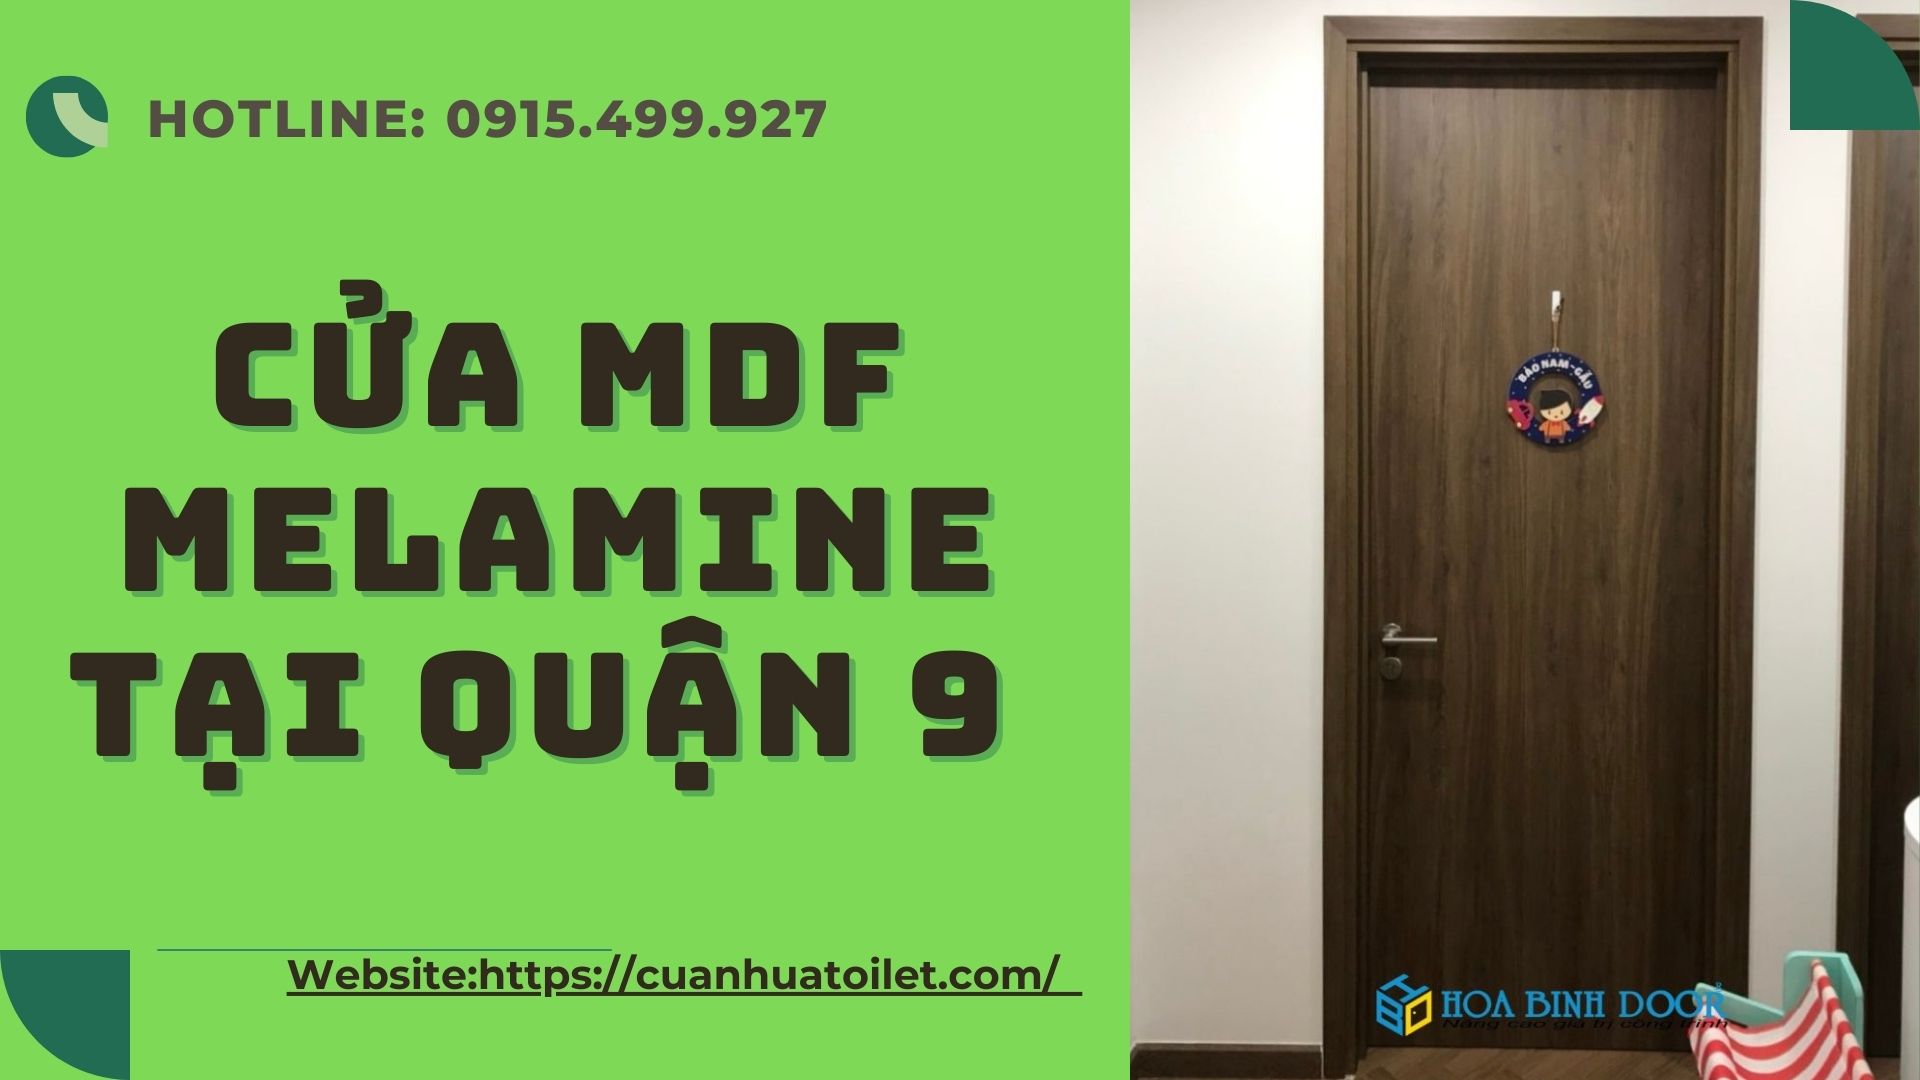 Cửa MDF Melamine tại Quận 9 - Cửa gỗ giá rẻ